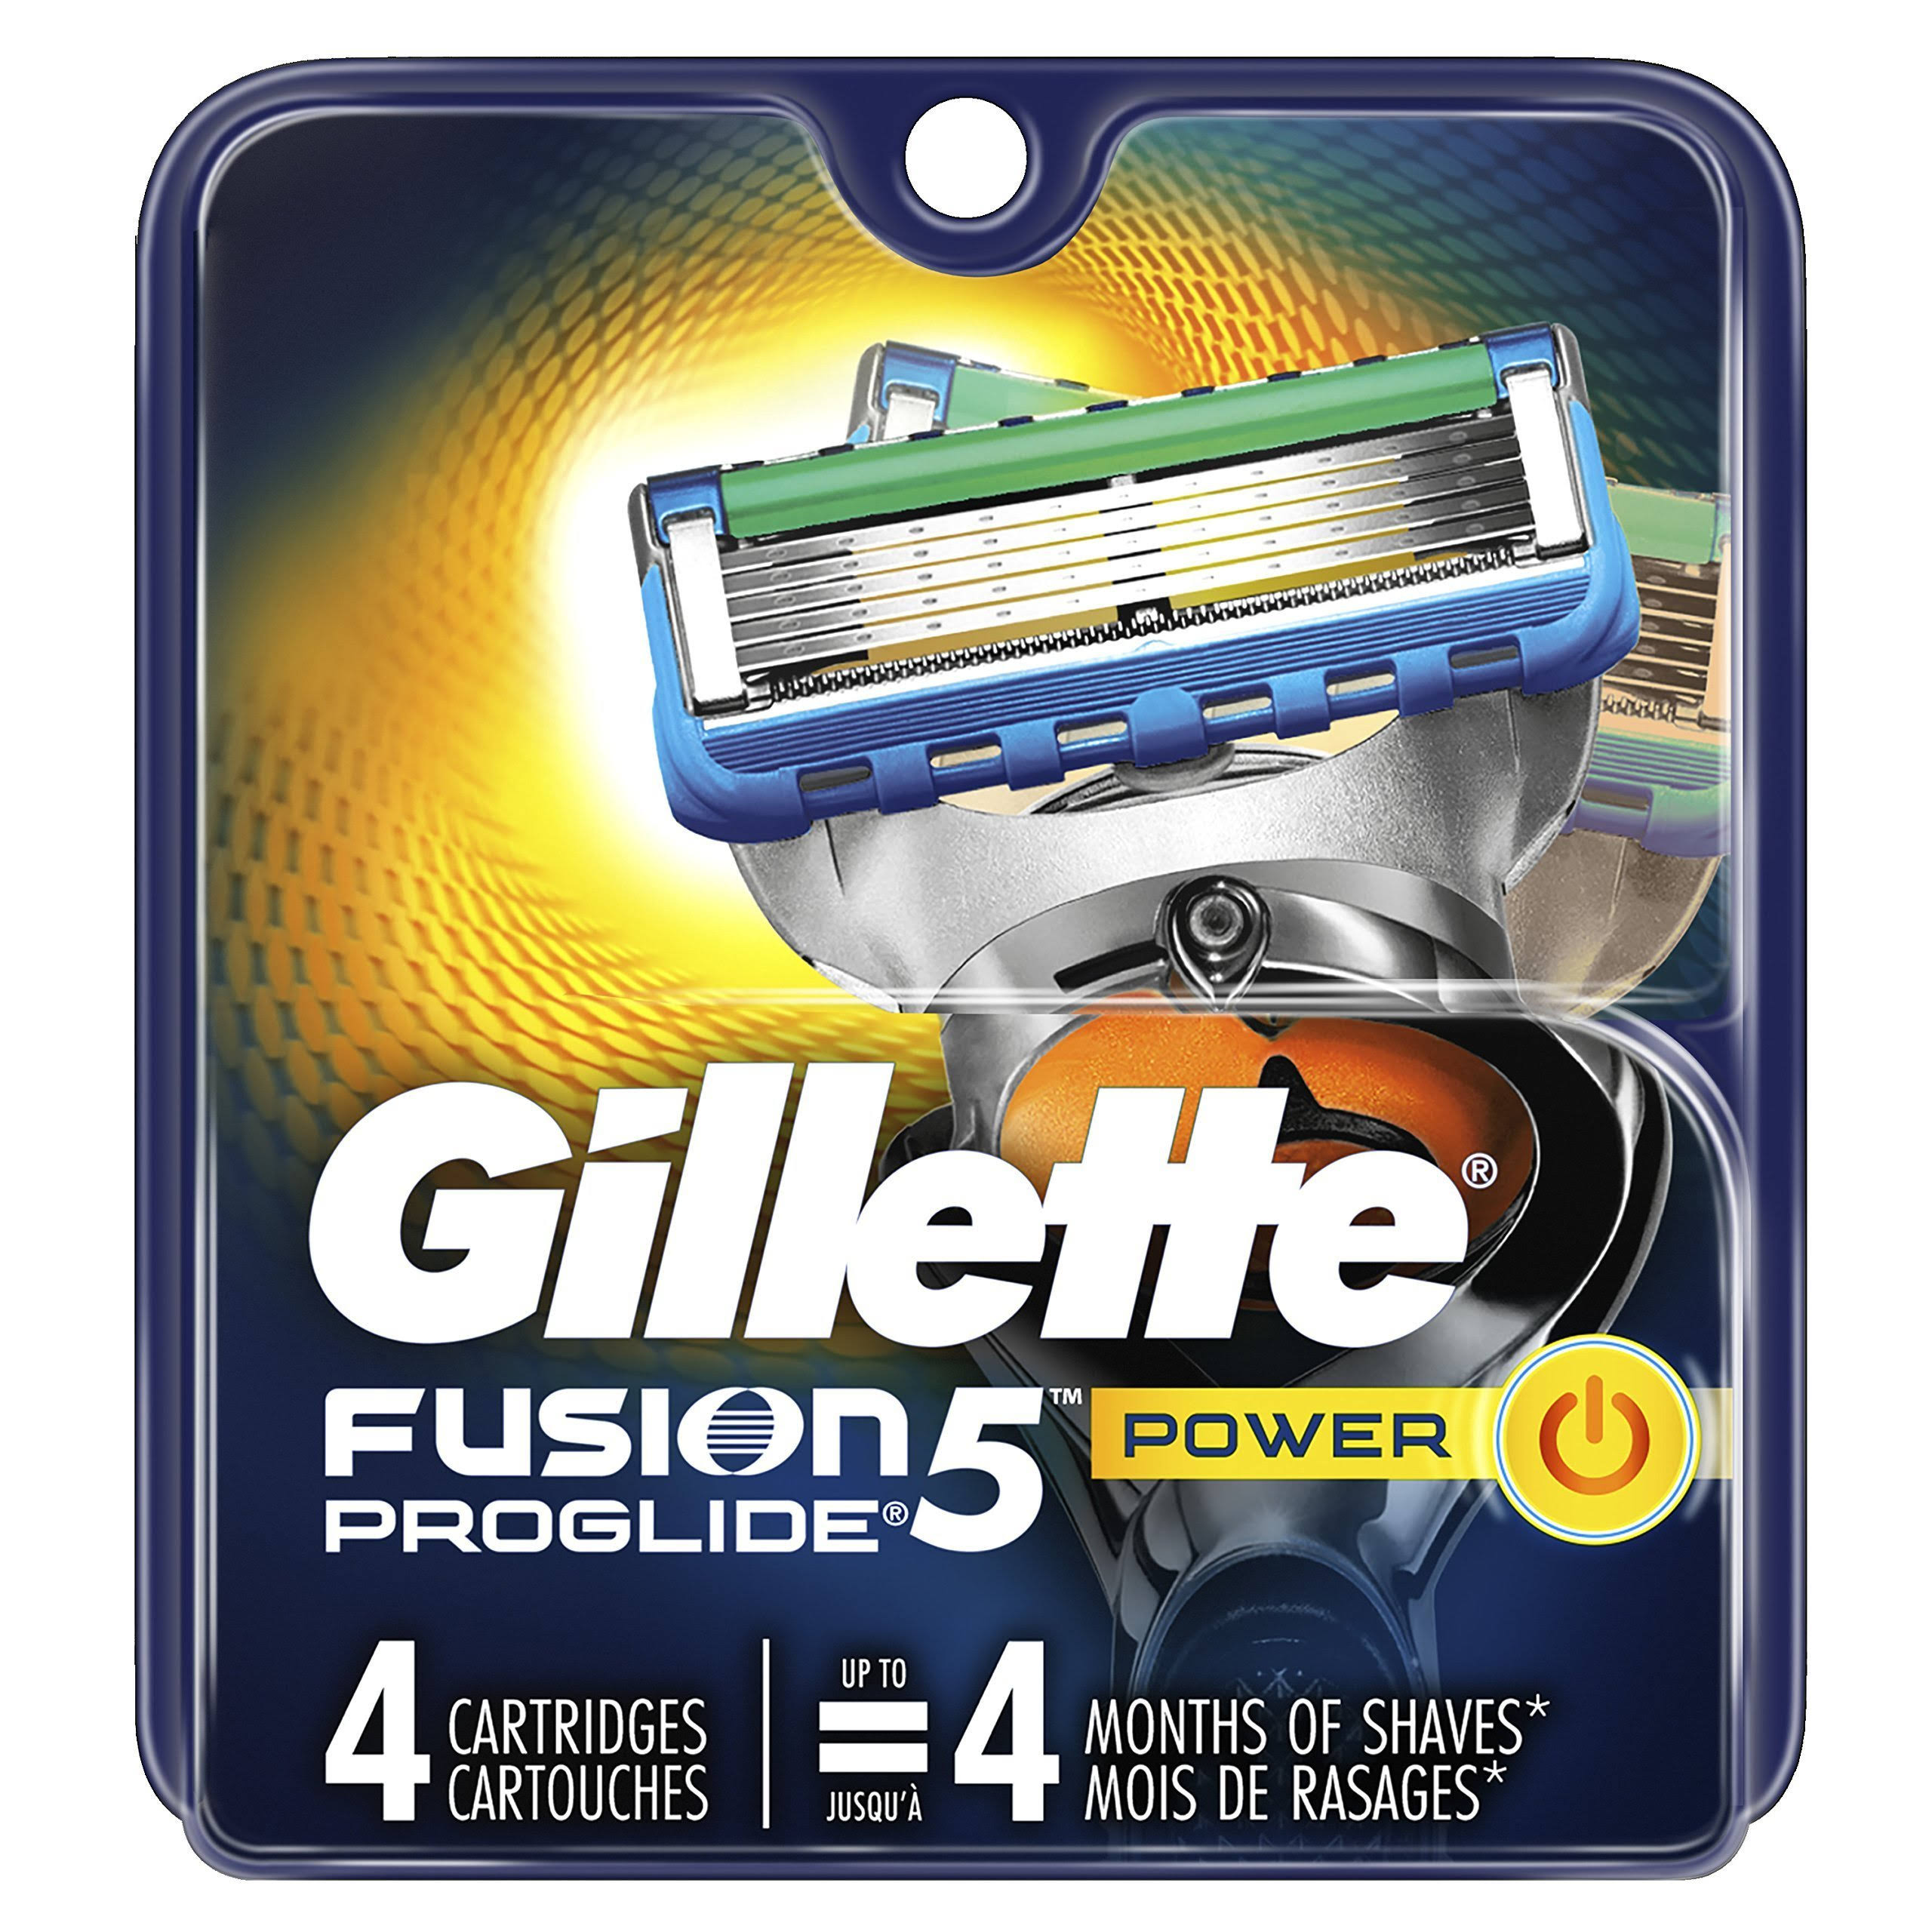 Gillette Fusion Proglide Power Cartridges - 4 Pack